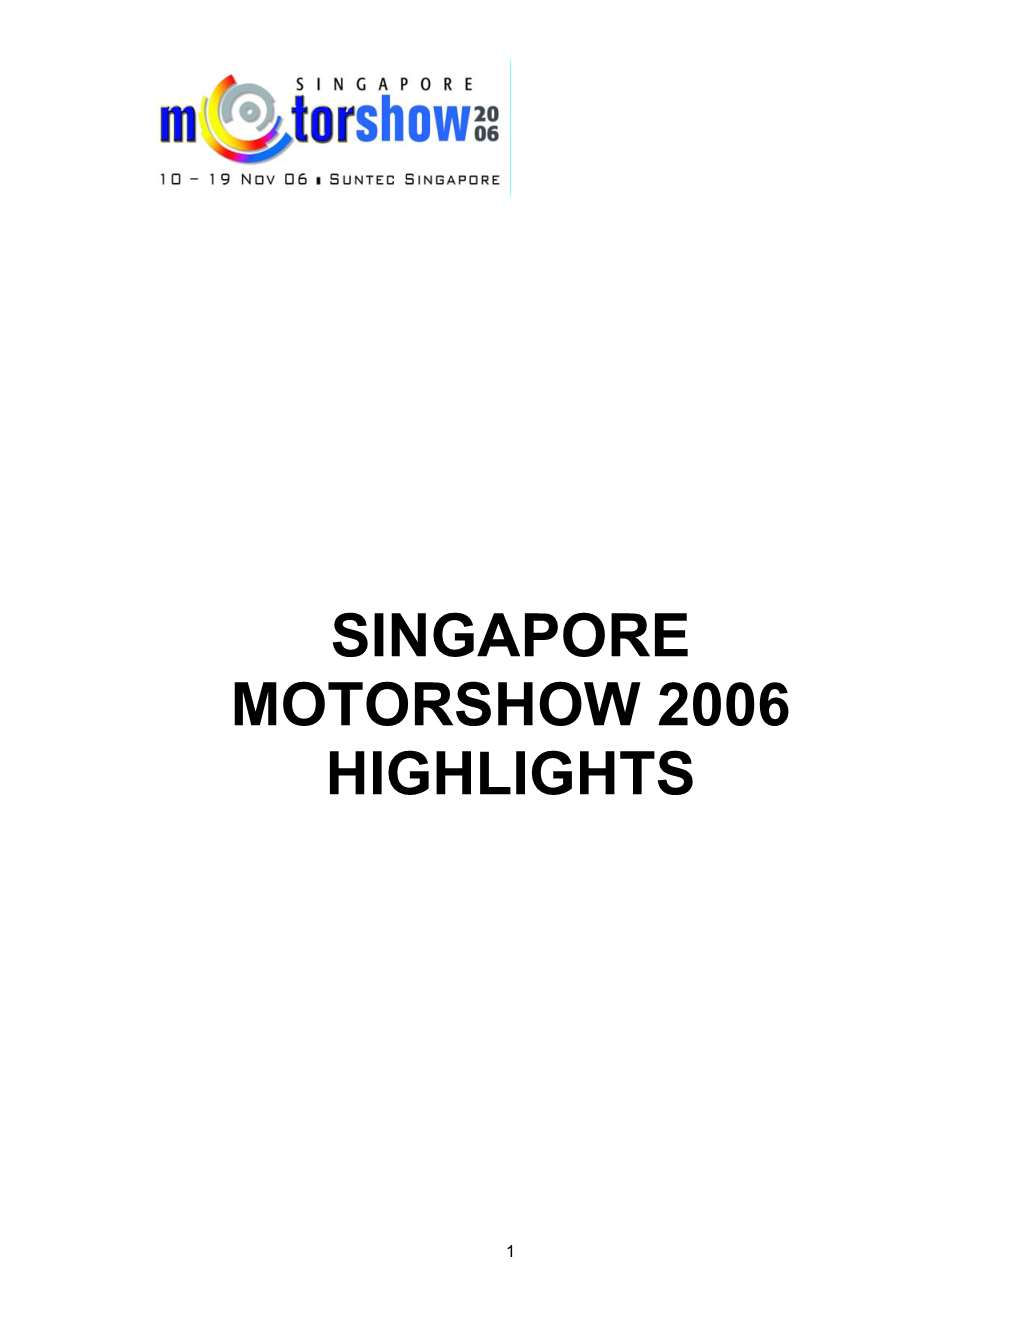 Singapore Motorshow 2006 Highlights